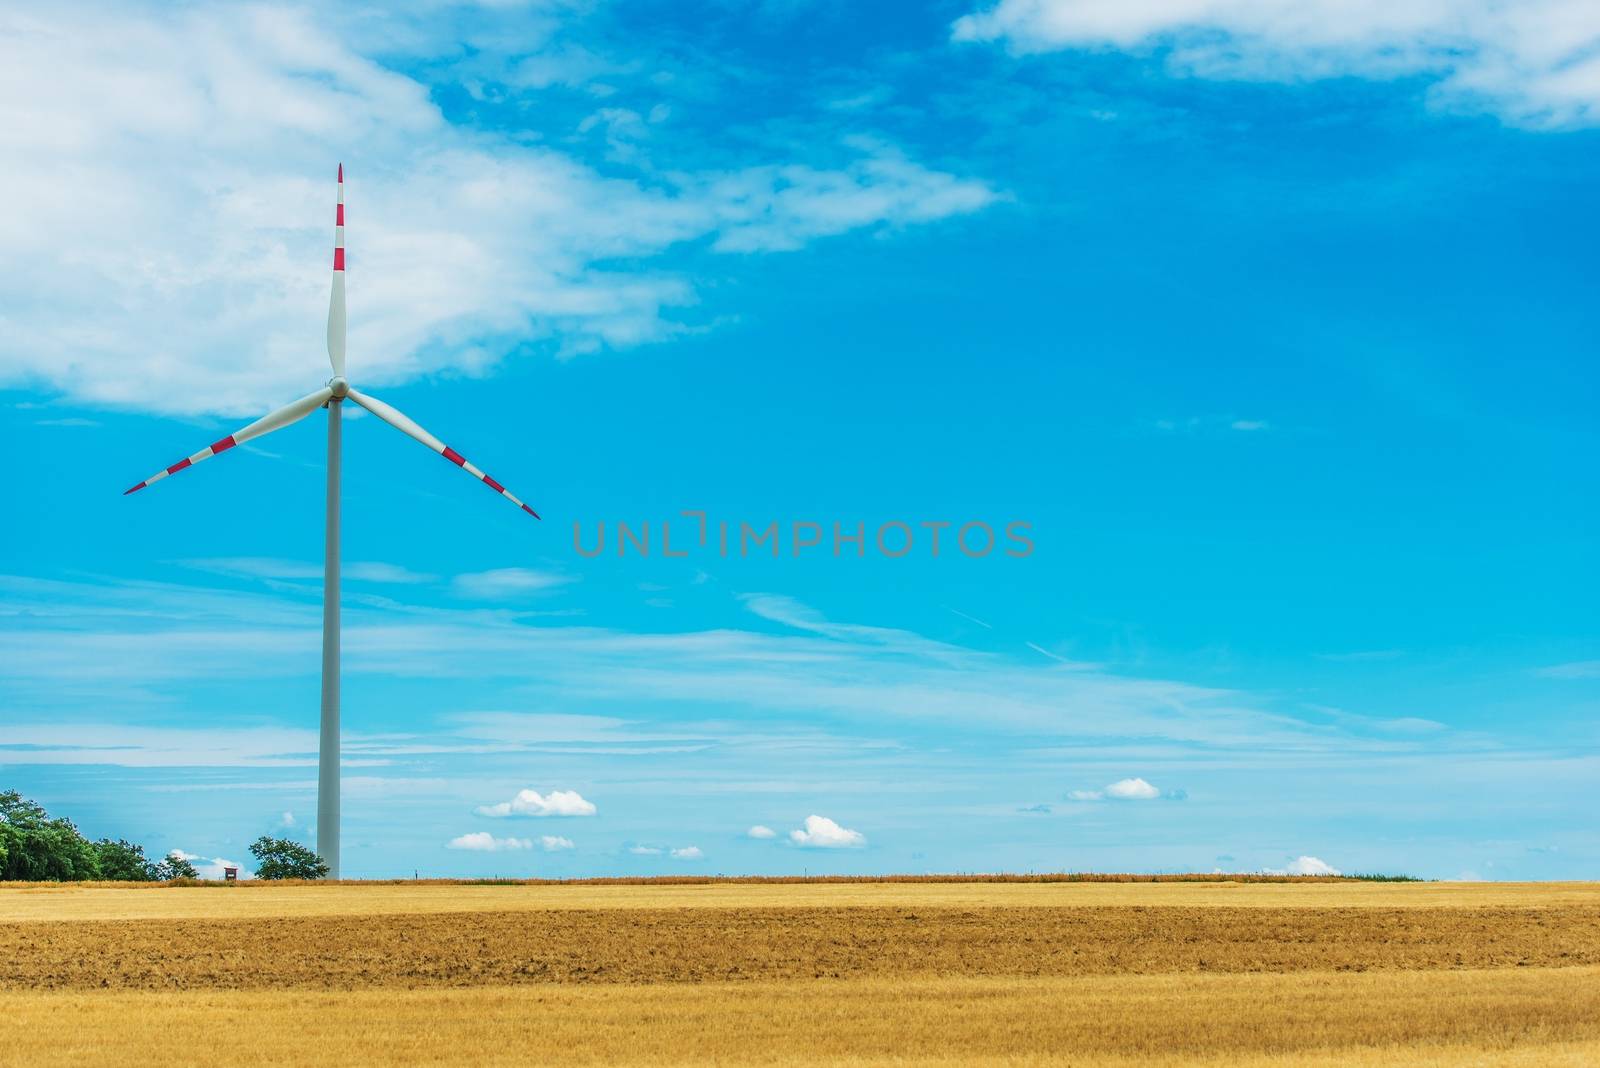 Countryside Wind Turbine. Northern Austria, Europe. Renewable Energy Source.